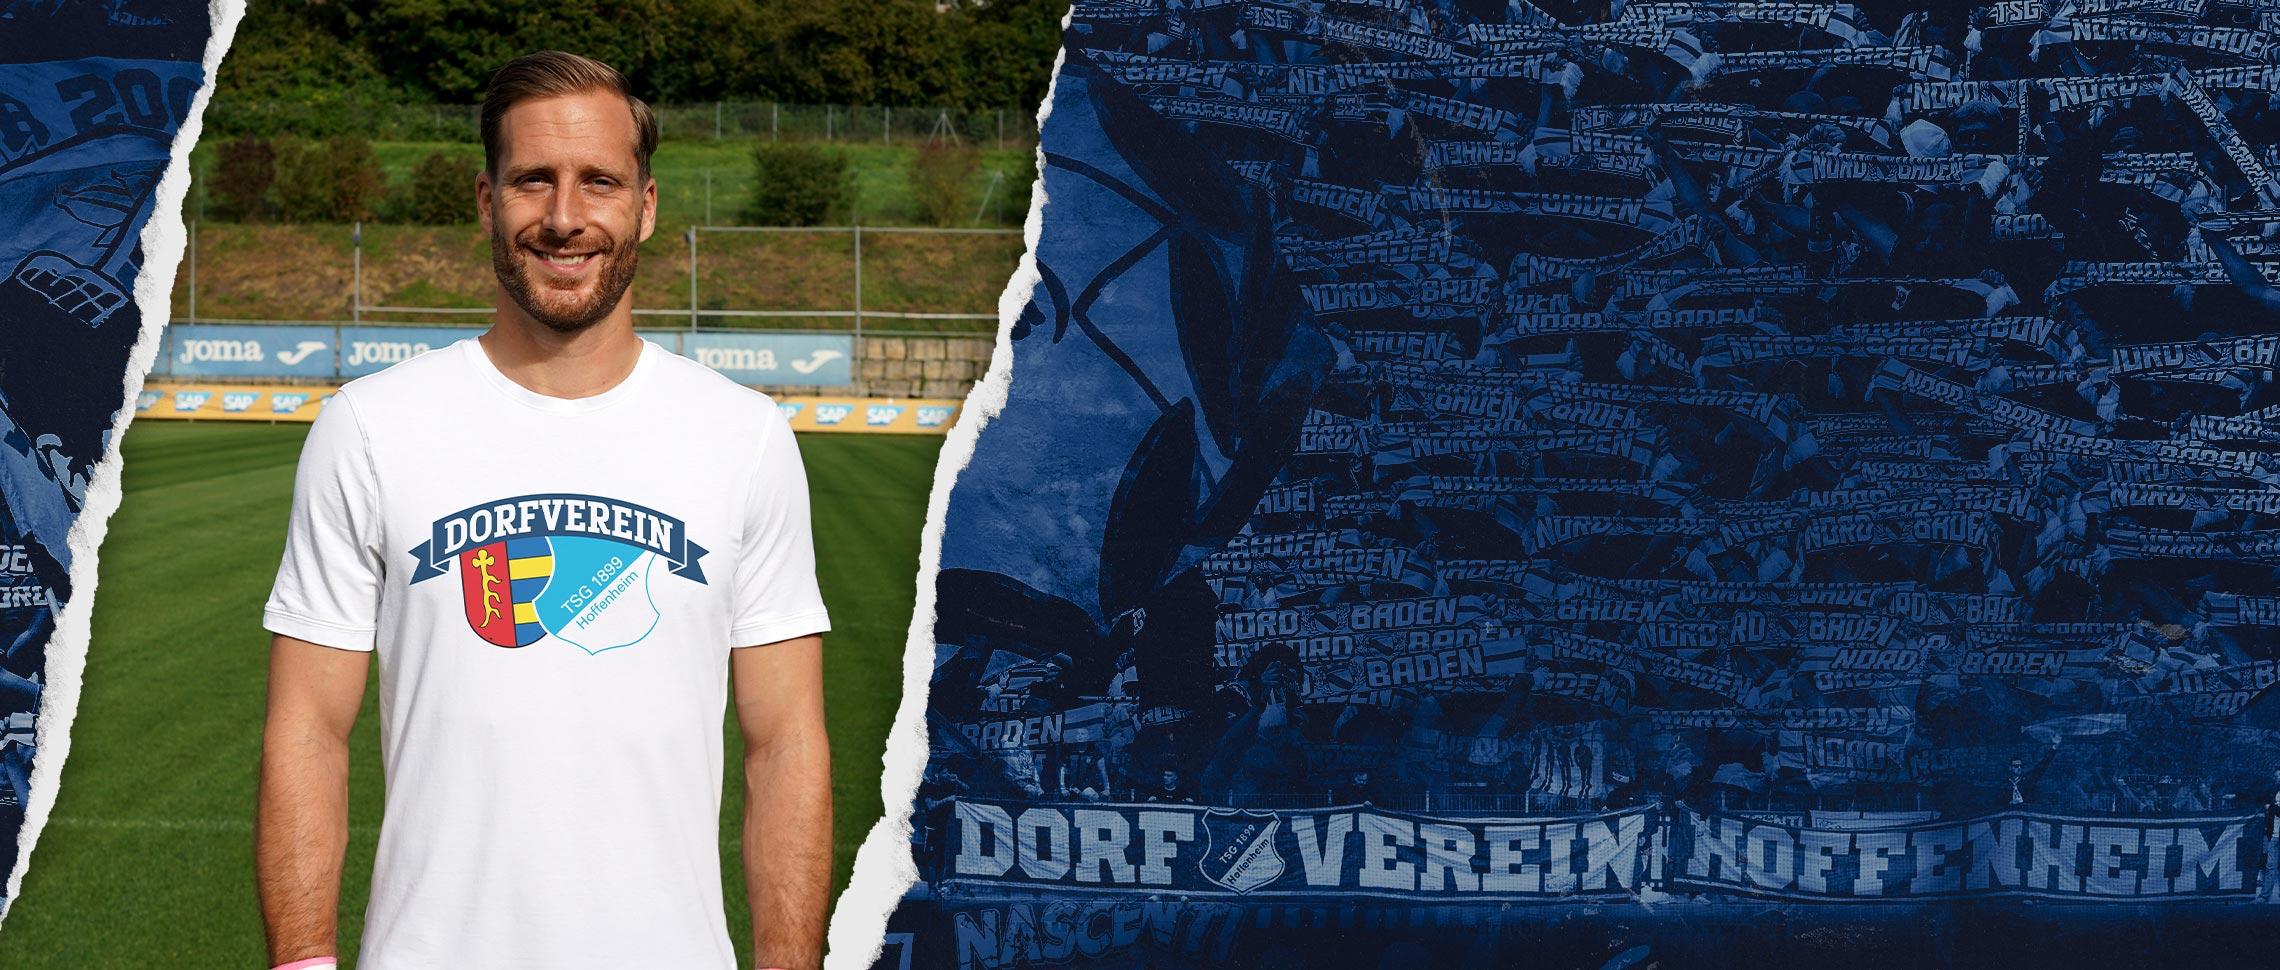 20231010-sap-tsg-hoffenheim-dorfverein-shirt